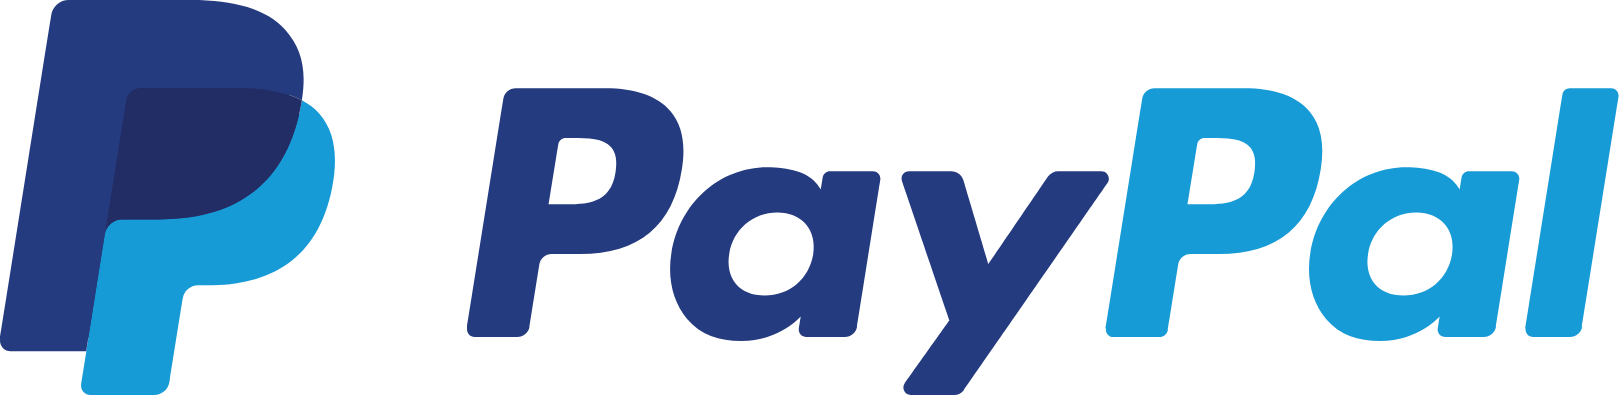 PayPal logo large (transparent PNG)